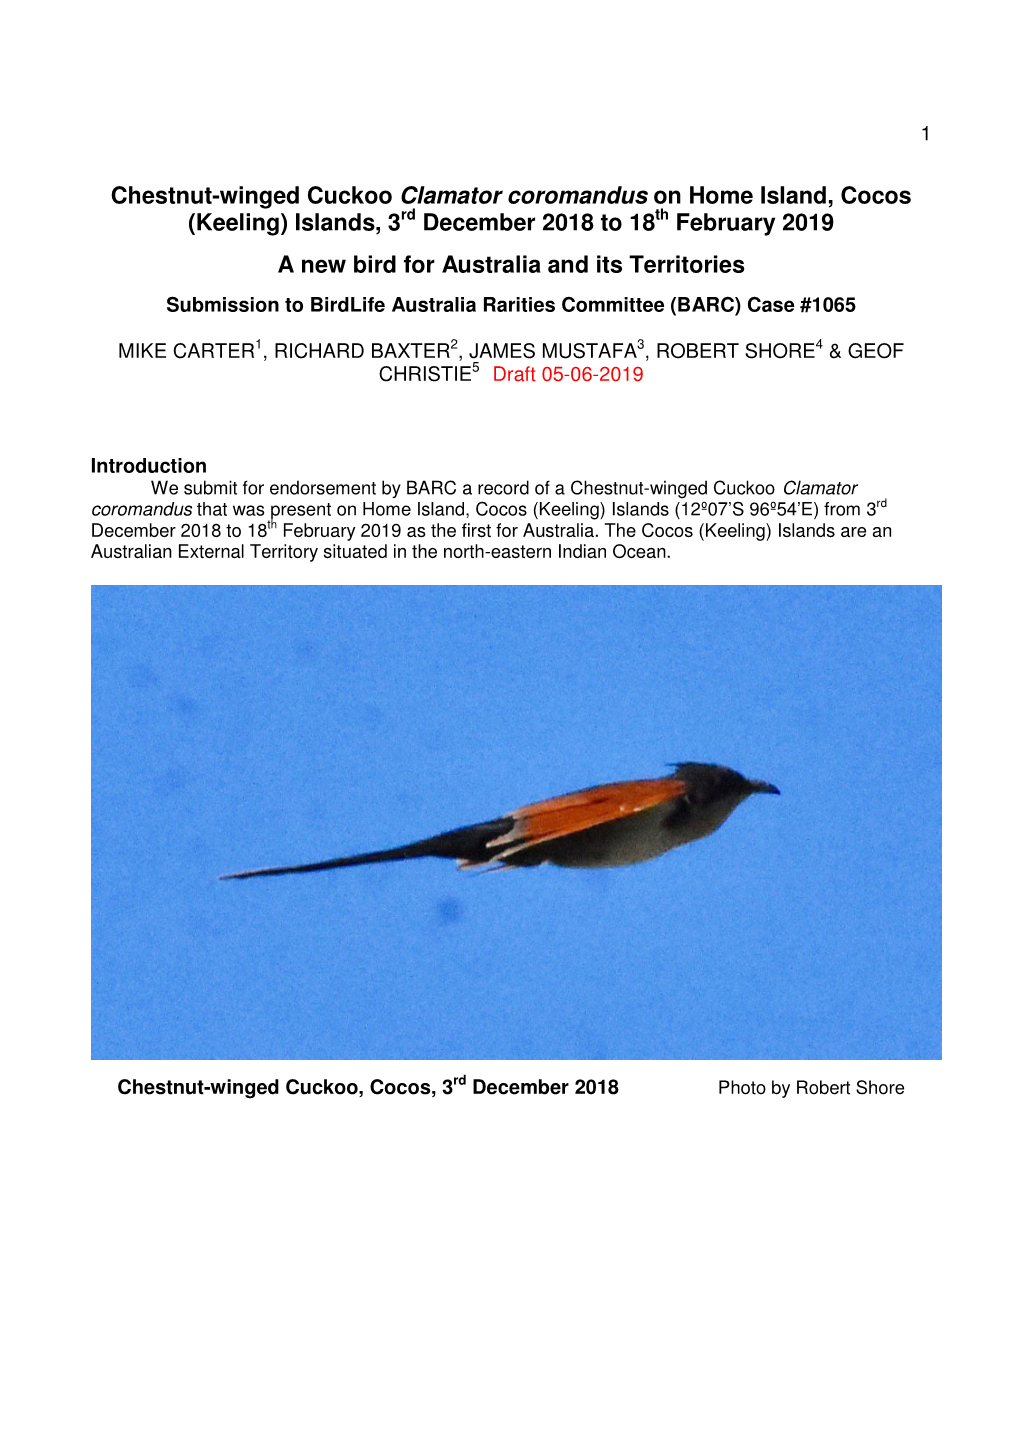 Chestnut-Winged Cuckoo Clamator Coromandus on Home Island, Cocos Rd Th (Keeling) Islands, 3 December 2018 to 18 February 2019